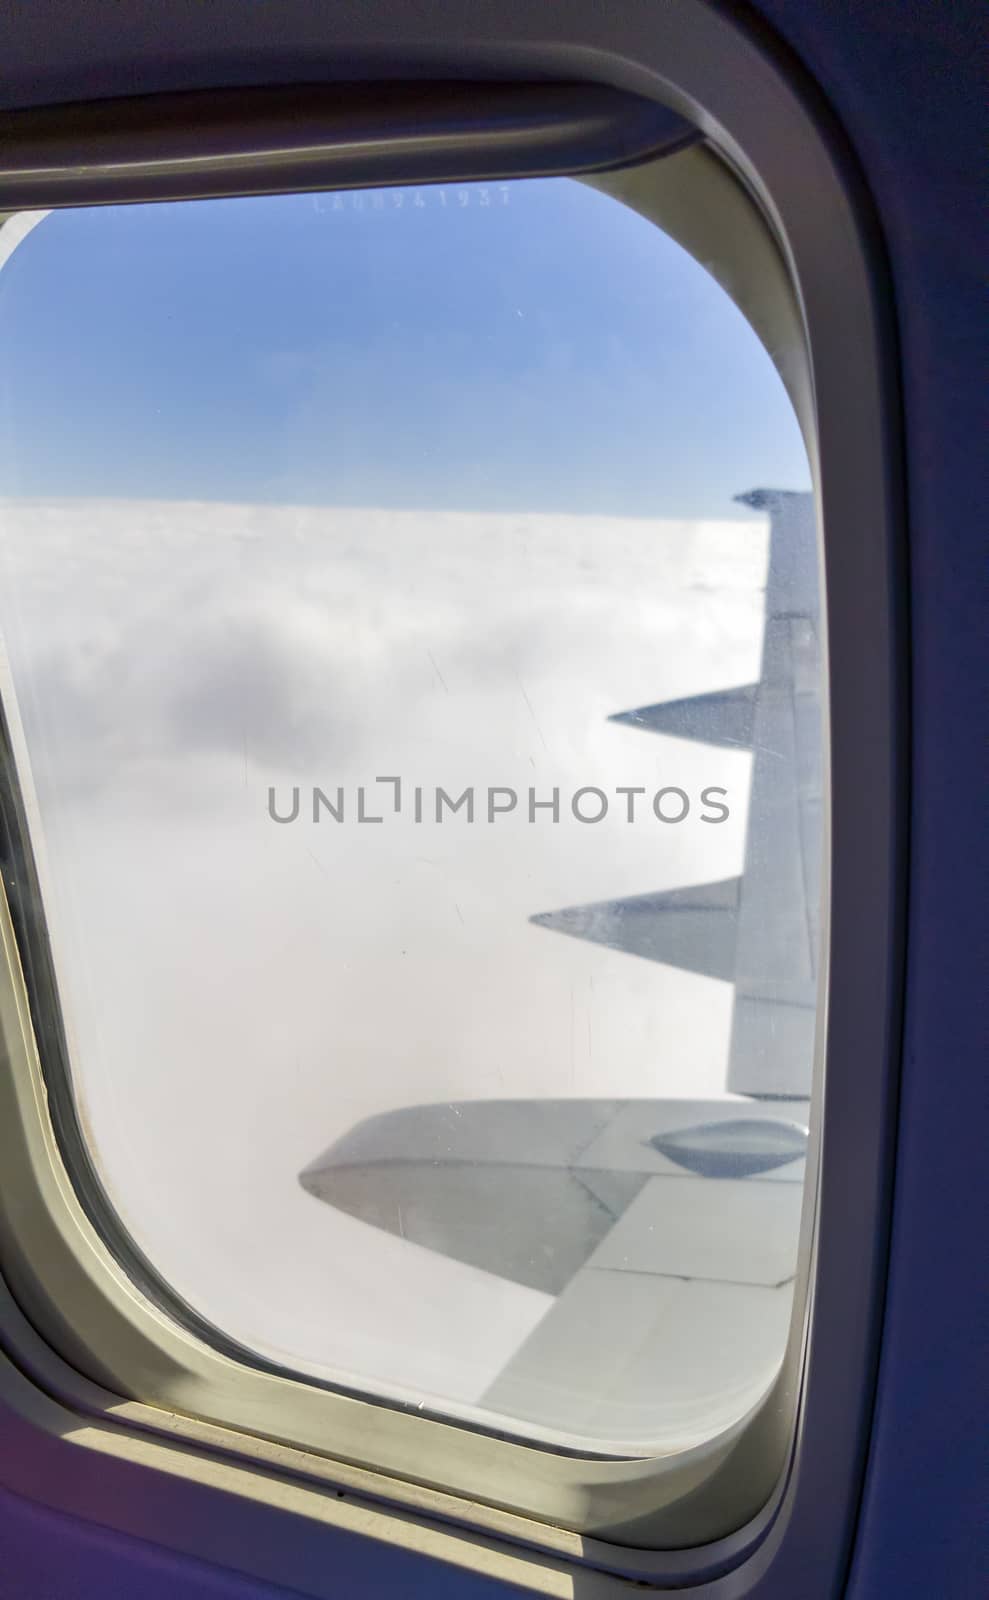 Plane window during flight by savcoco